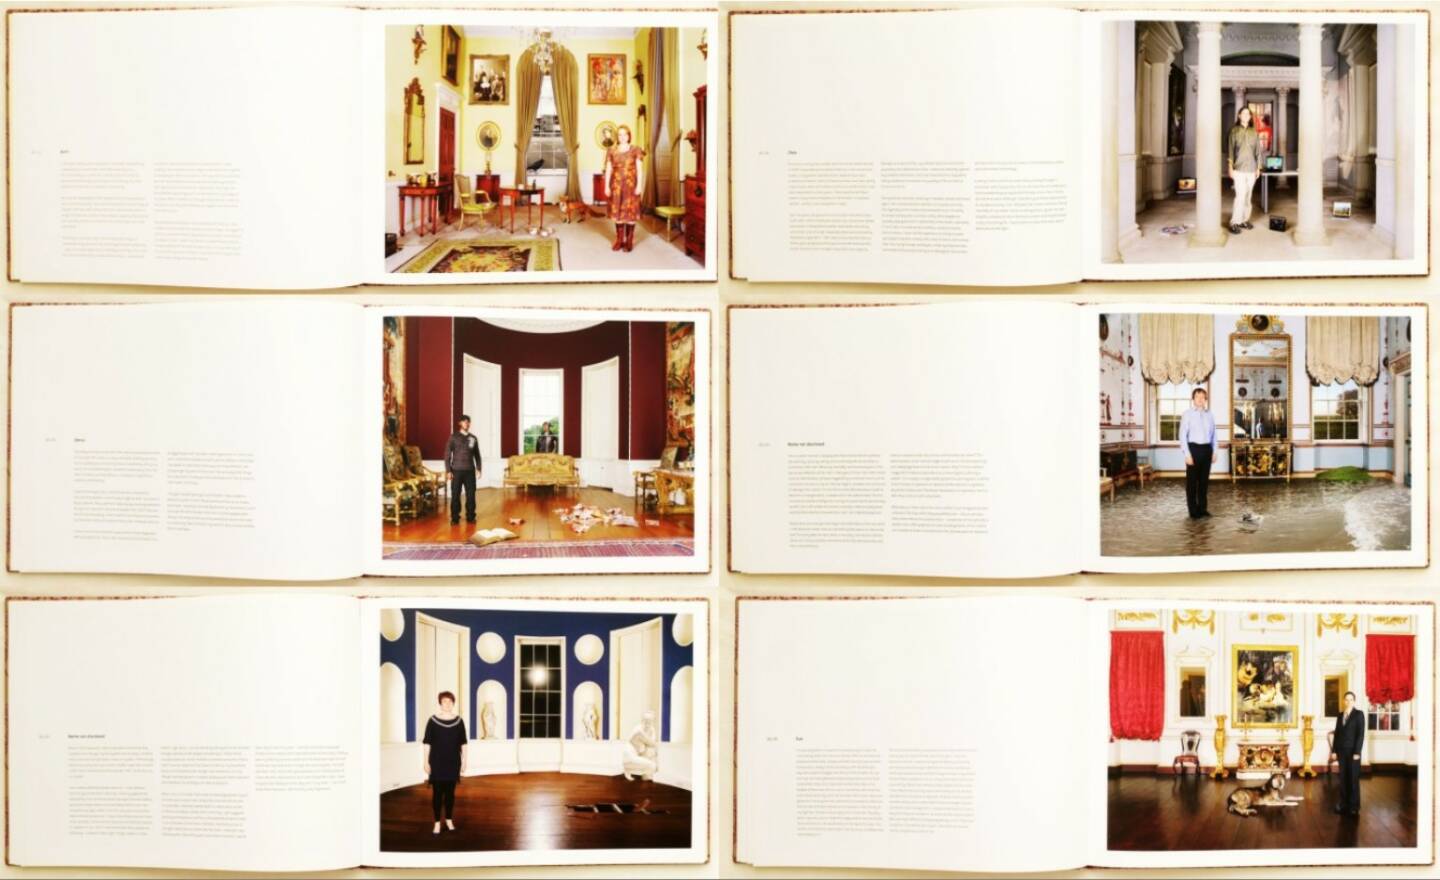 Alexa Wright - A View from Inside, white-card 2012, Beispielseiten, sample spreads - http://josefchladek.com/book/alexa_wright_-_a_view_from_inside